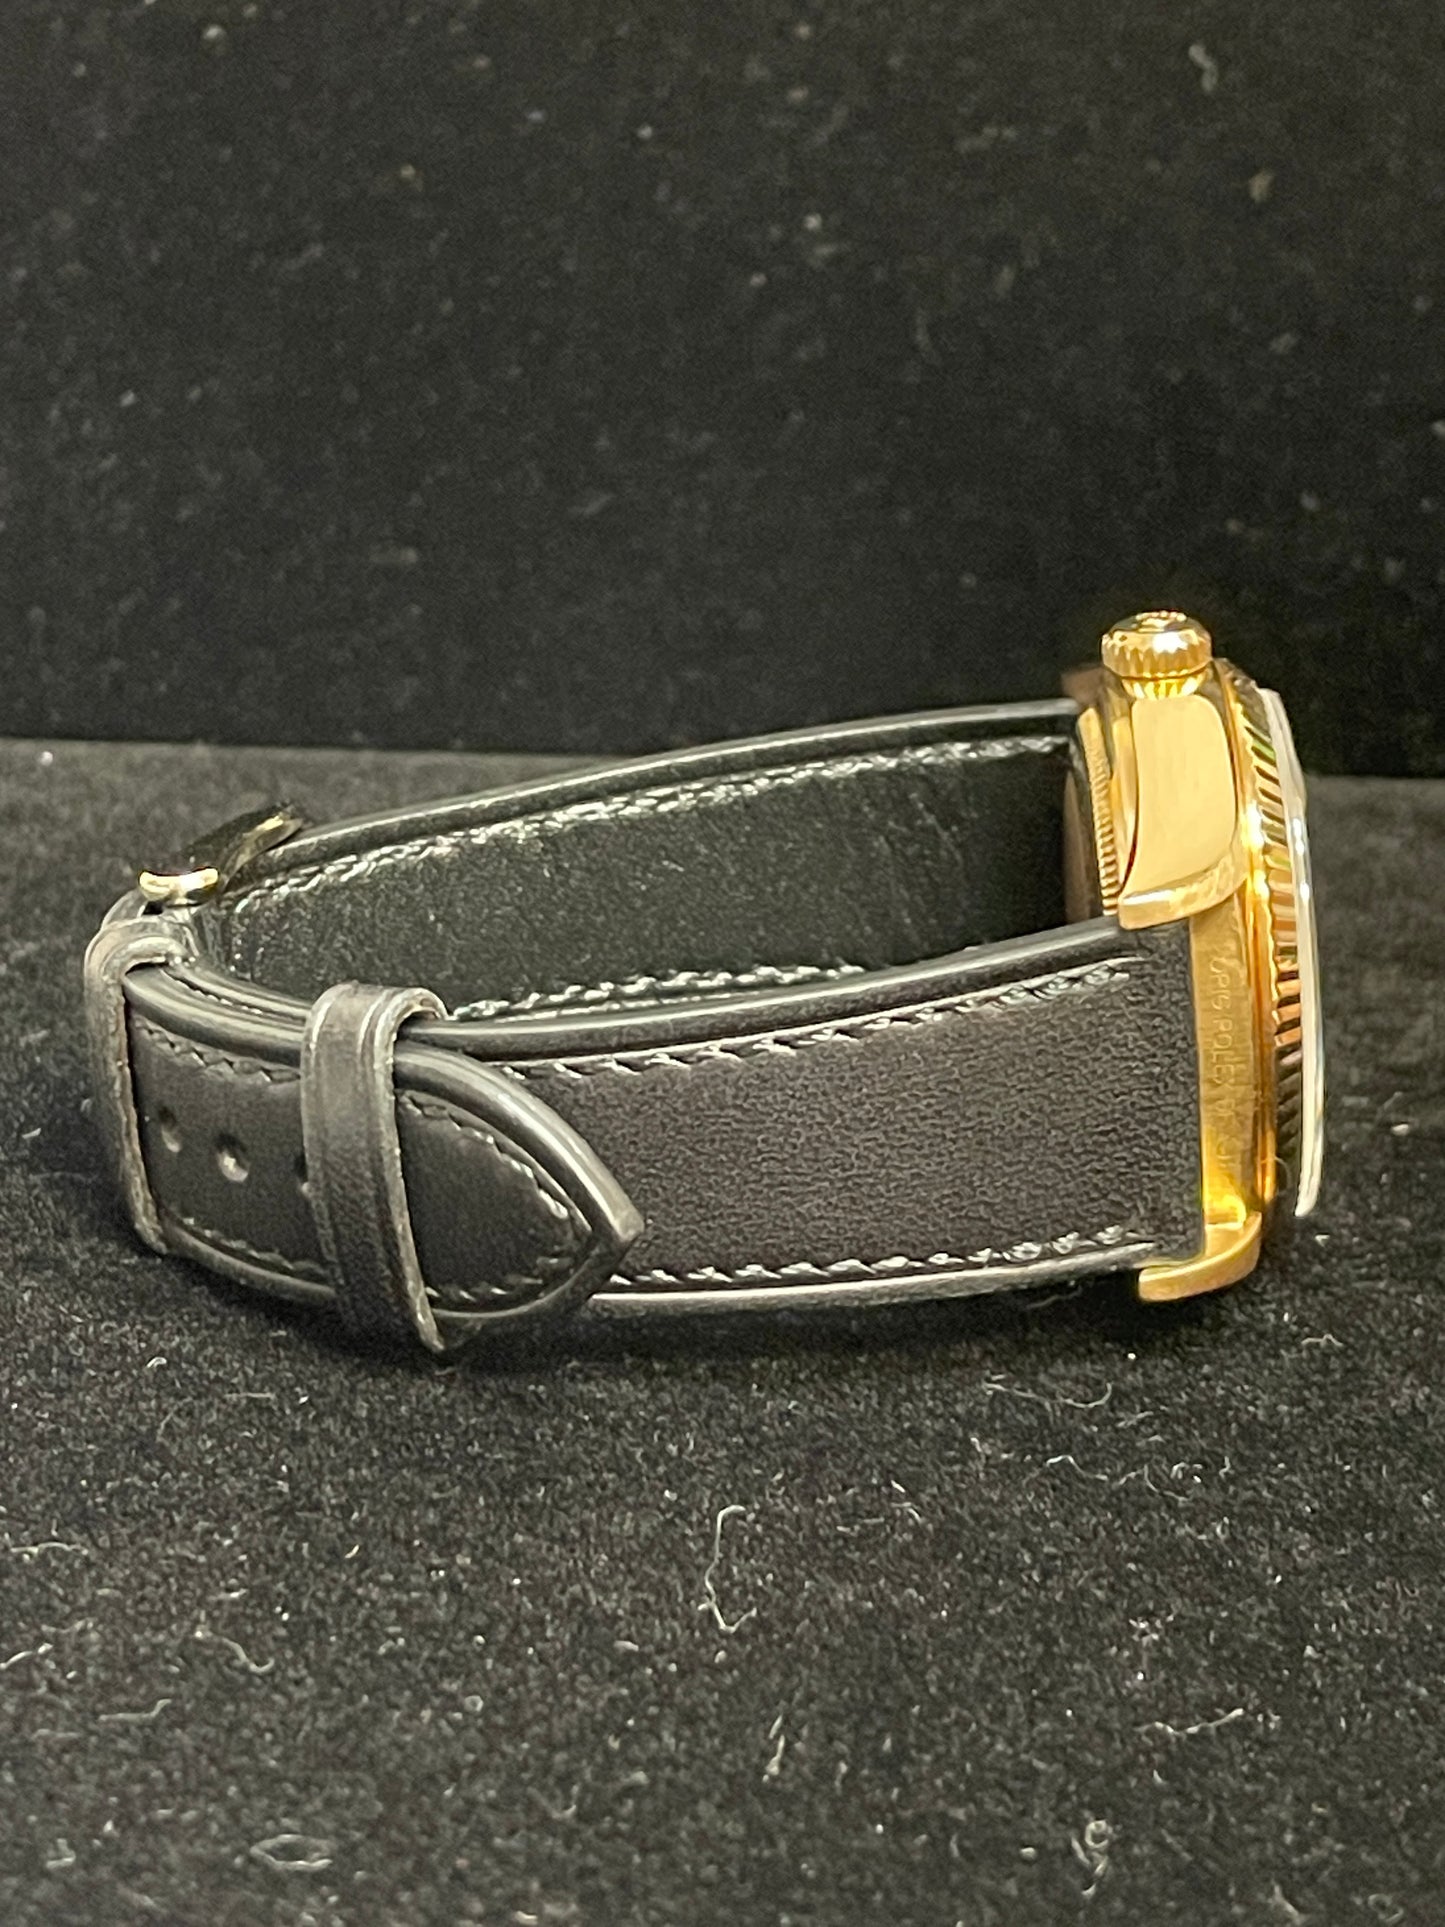 1987 Rolex Day-Date 18038 Black Diamond Black Leather Bracelet No Papers 36mm